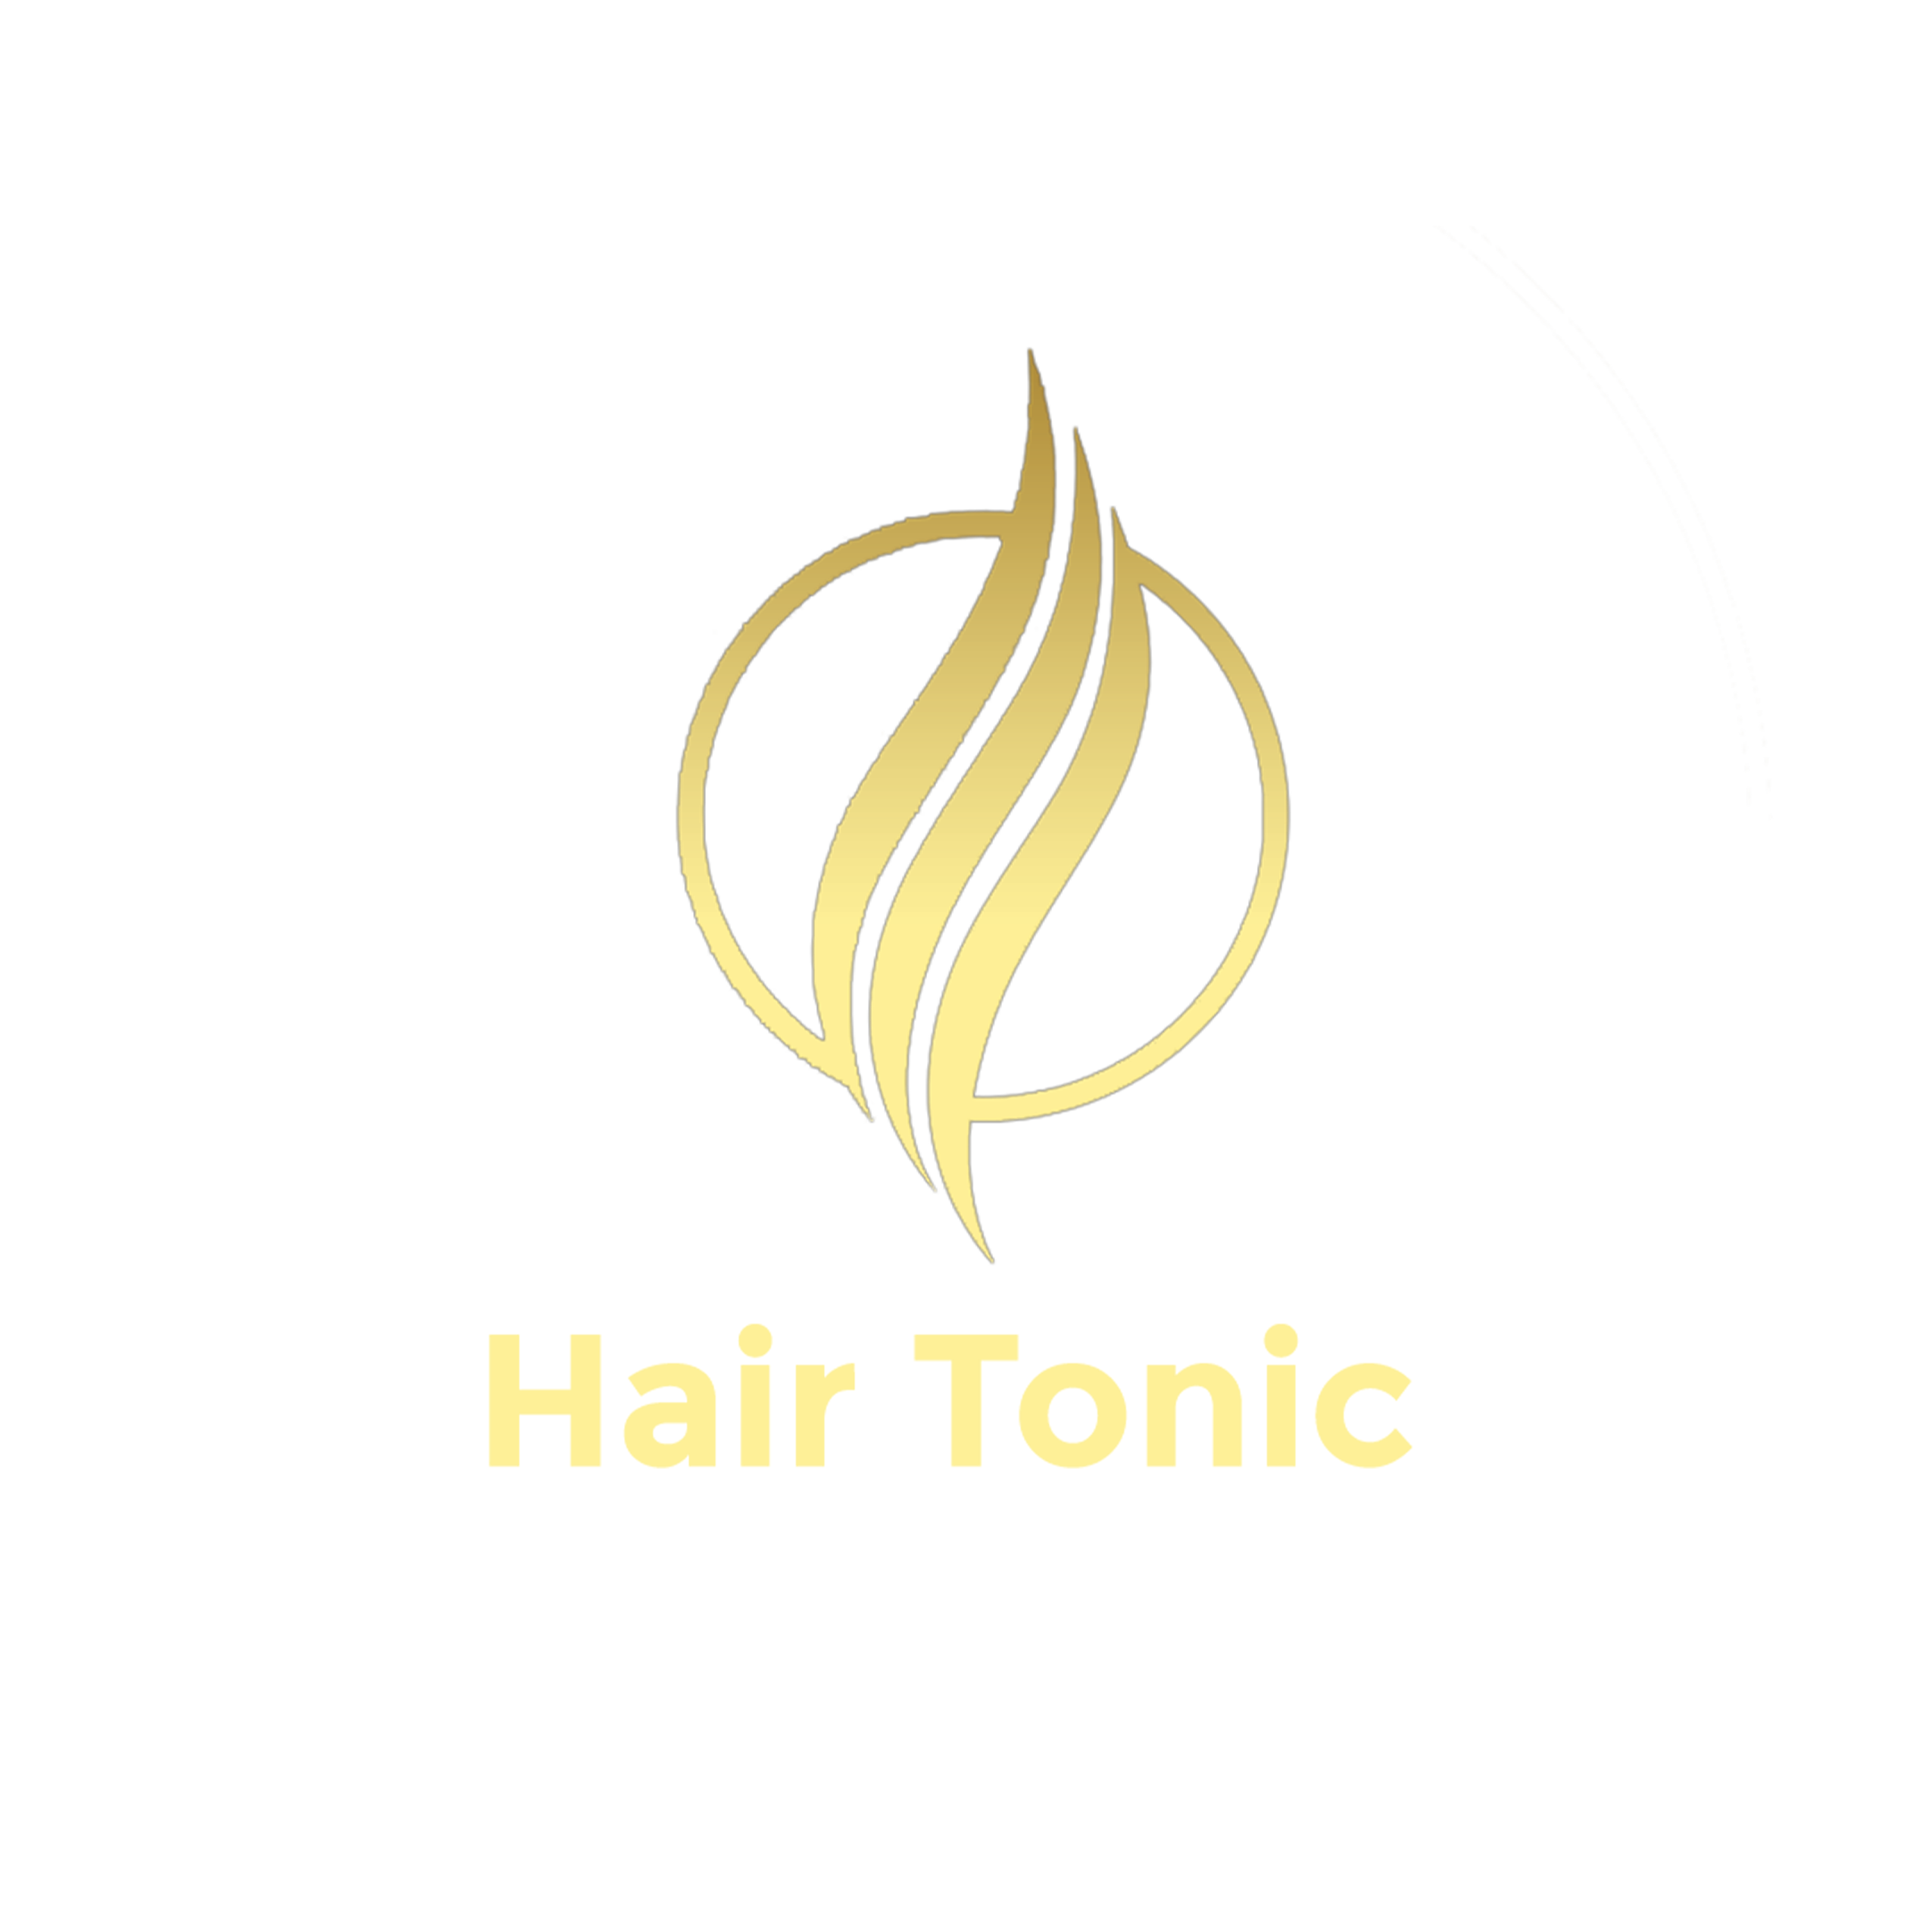 Hair Tonic Beauty | Friseursalon und Kosmetik | München Logo